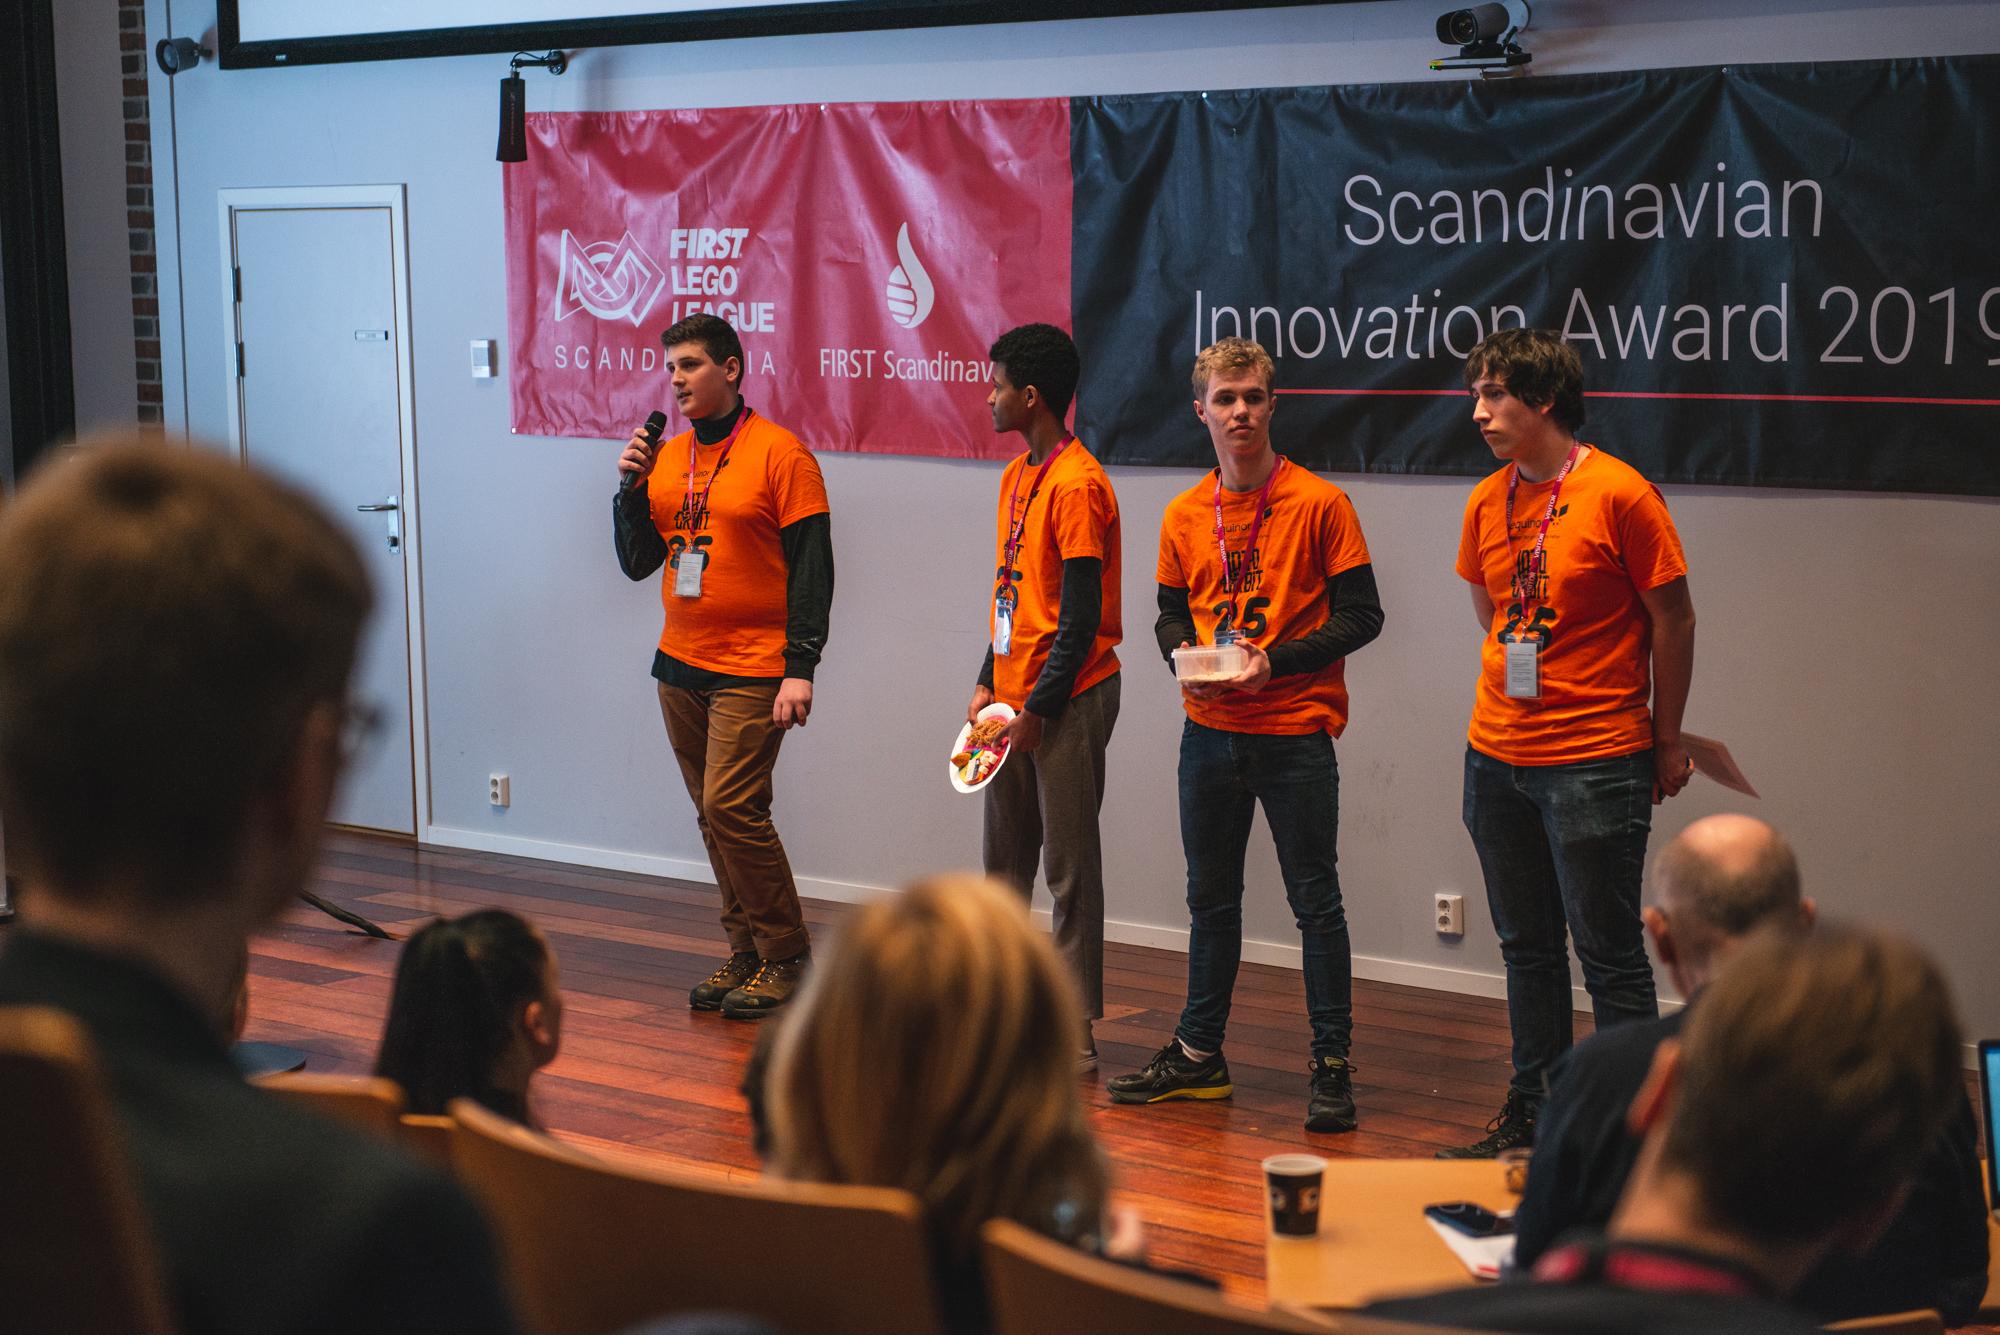 Scandinavian Innovation Award, Photo by Sebastian Siggerud, FIRST Scandinavia